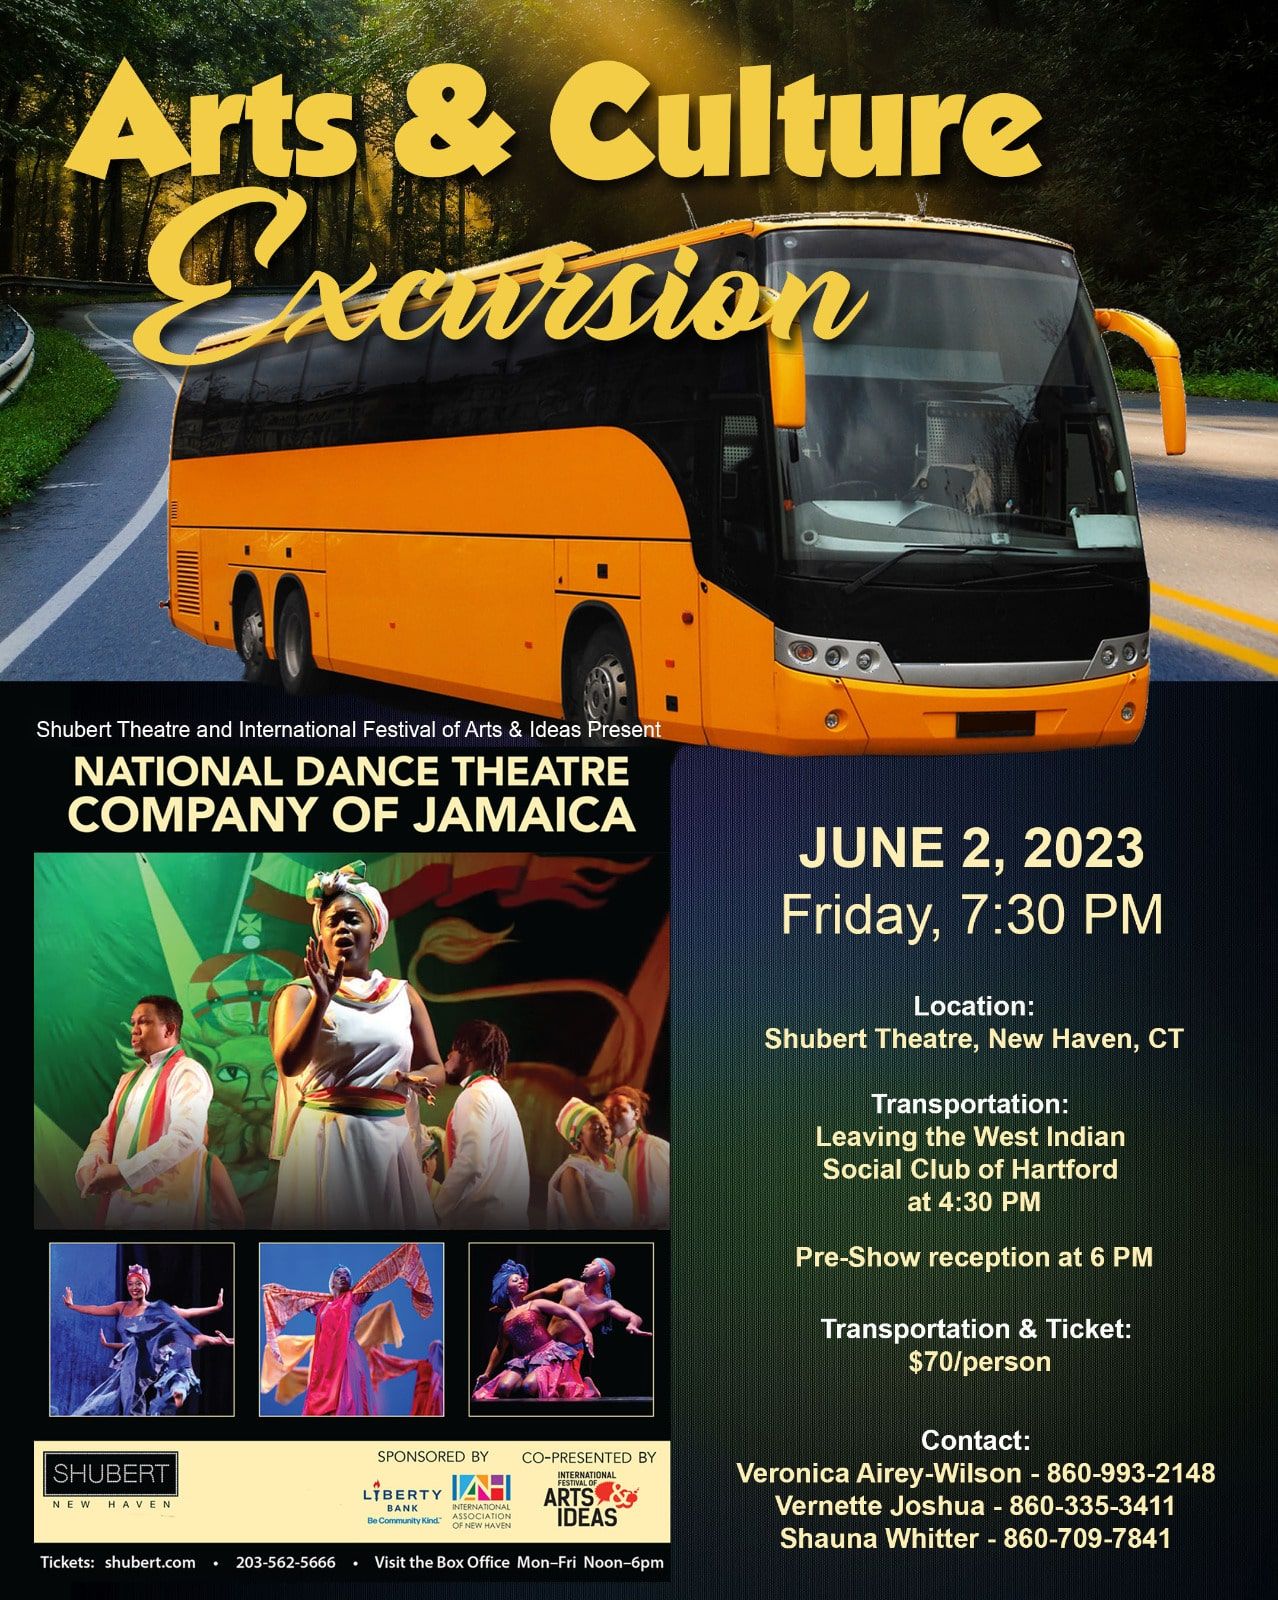 Arts & Culture Excursion - National Dance Theatre Company of Jamaica